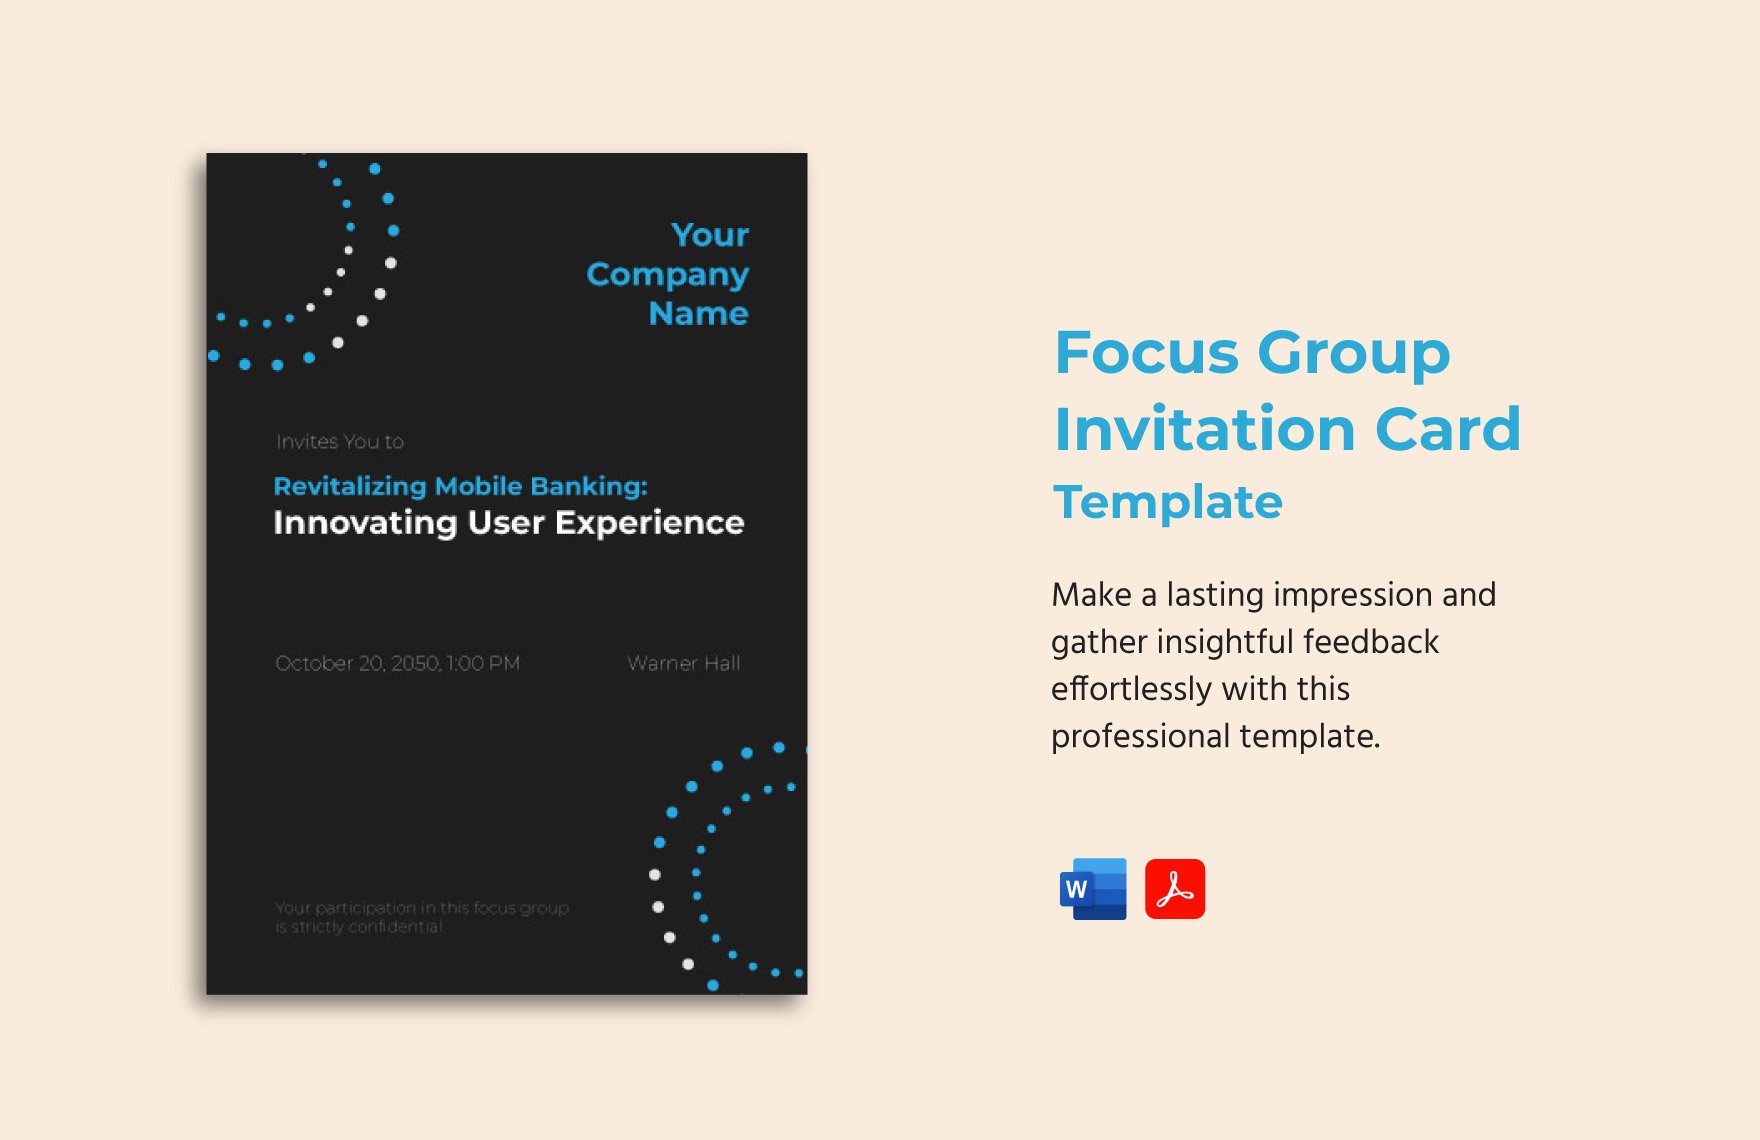 Focus Group Invitation Card Template